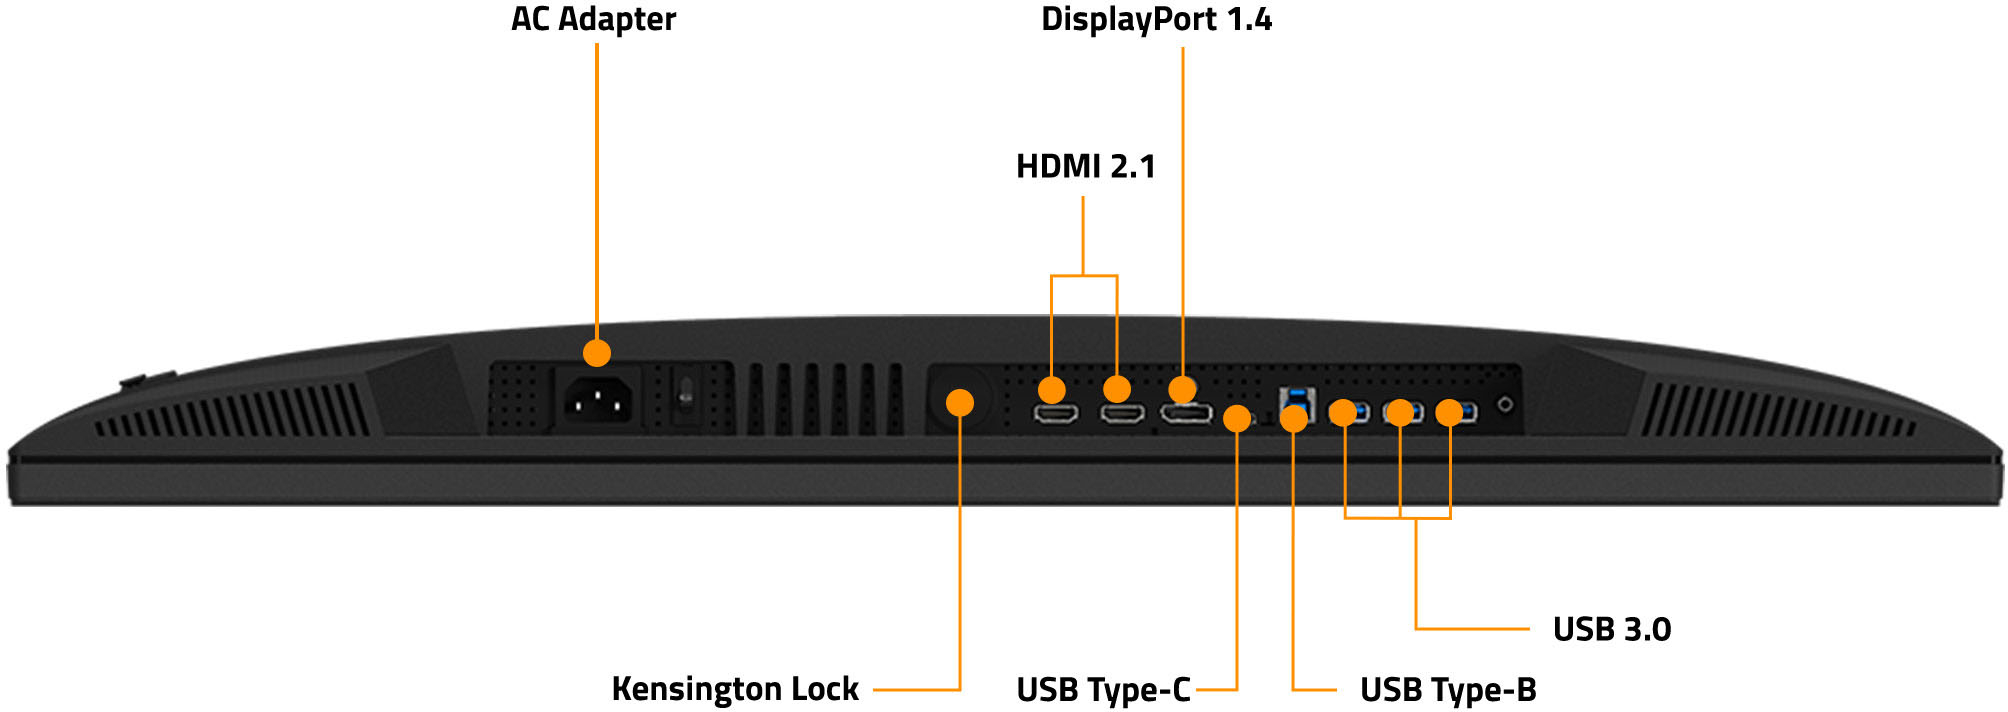 GIGABYTE M32U 32 LED 4K UHD FreeSync Premium Pro SS IPS Gaming Monitor  with HDR (HDMI, DisplayPort, USB Black M32U-SA - Best Buy